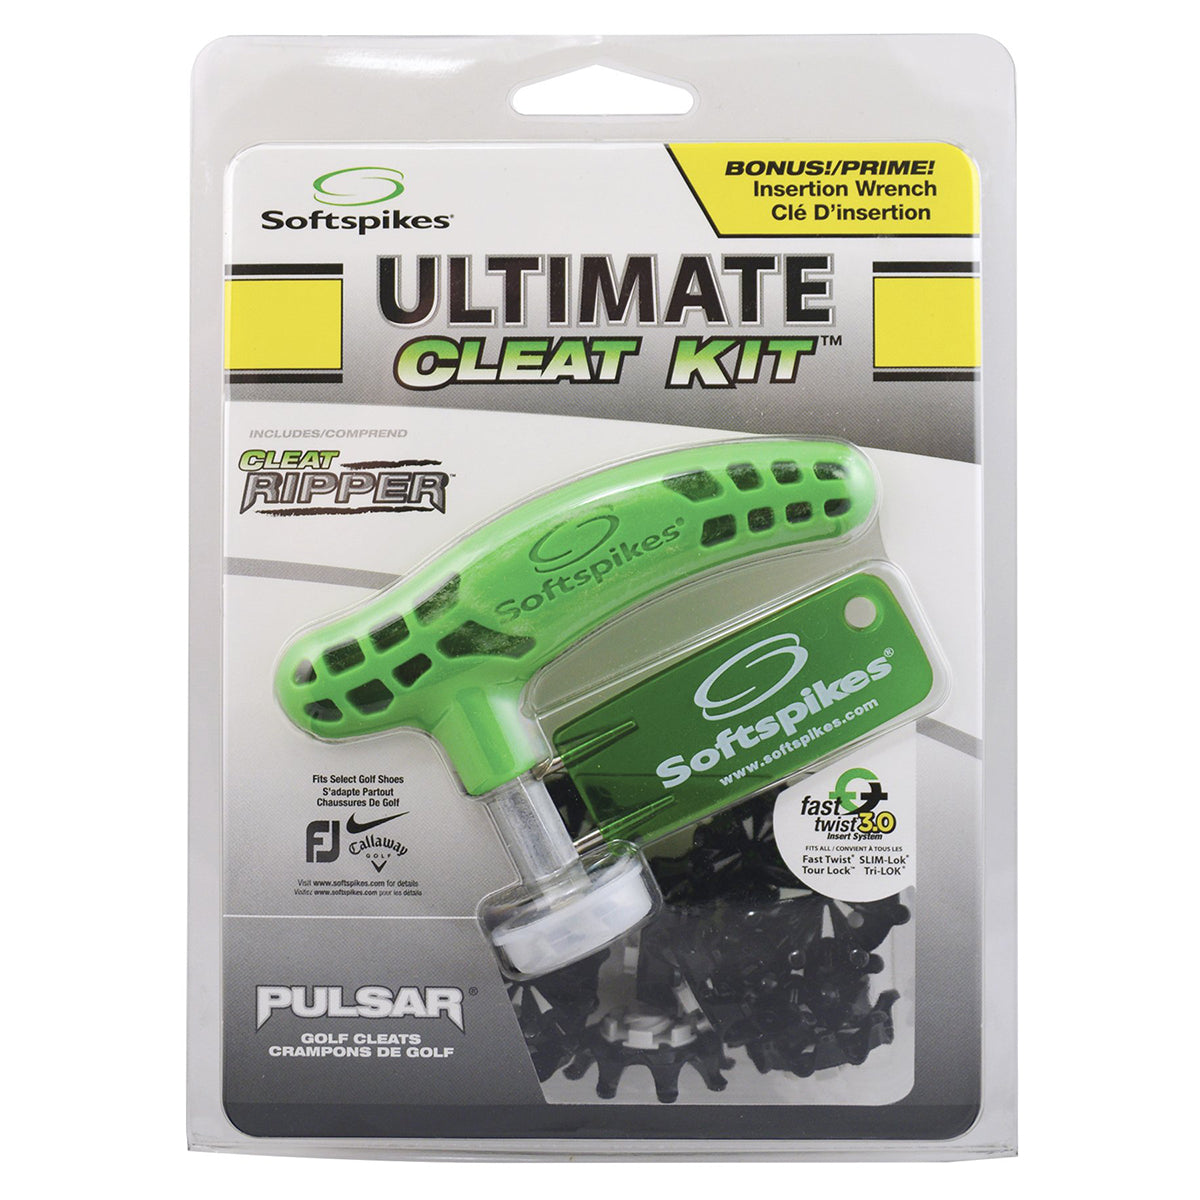 Softspikes Ultimate Cleat Kit | Pulsar (Fast Twist 3.0®)